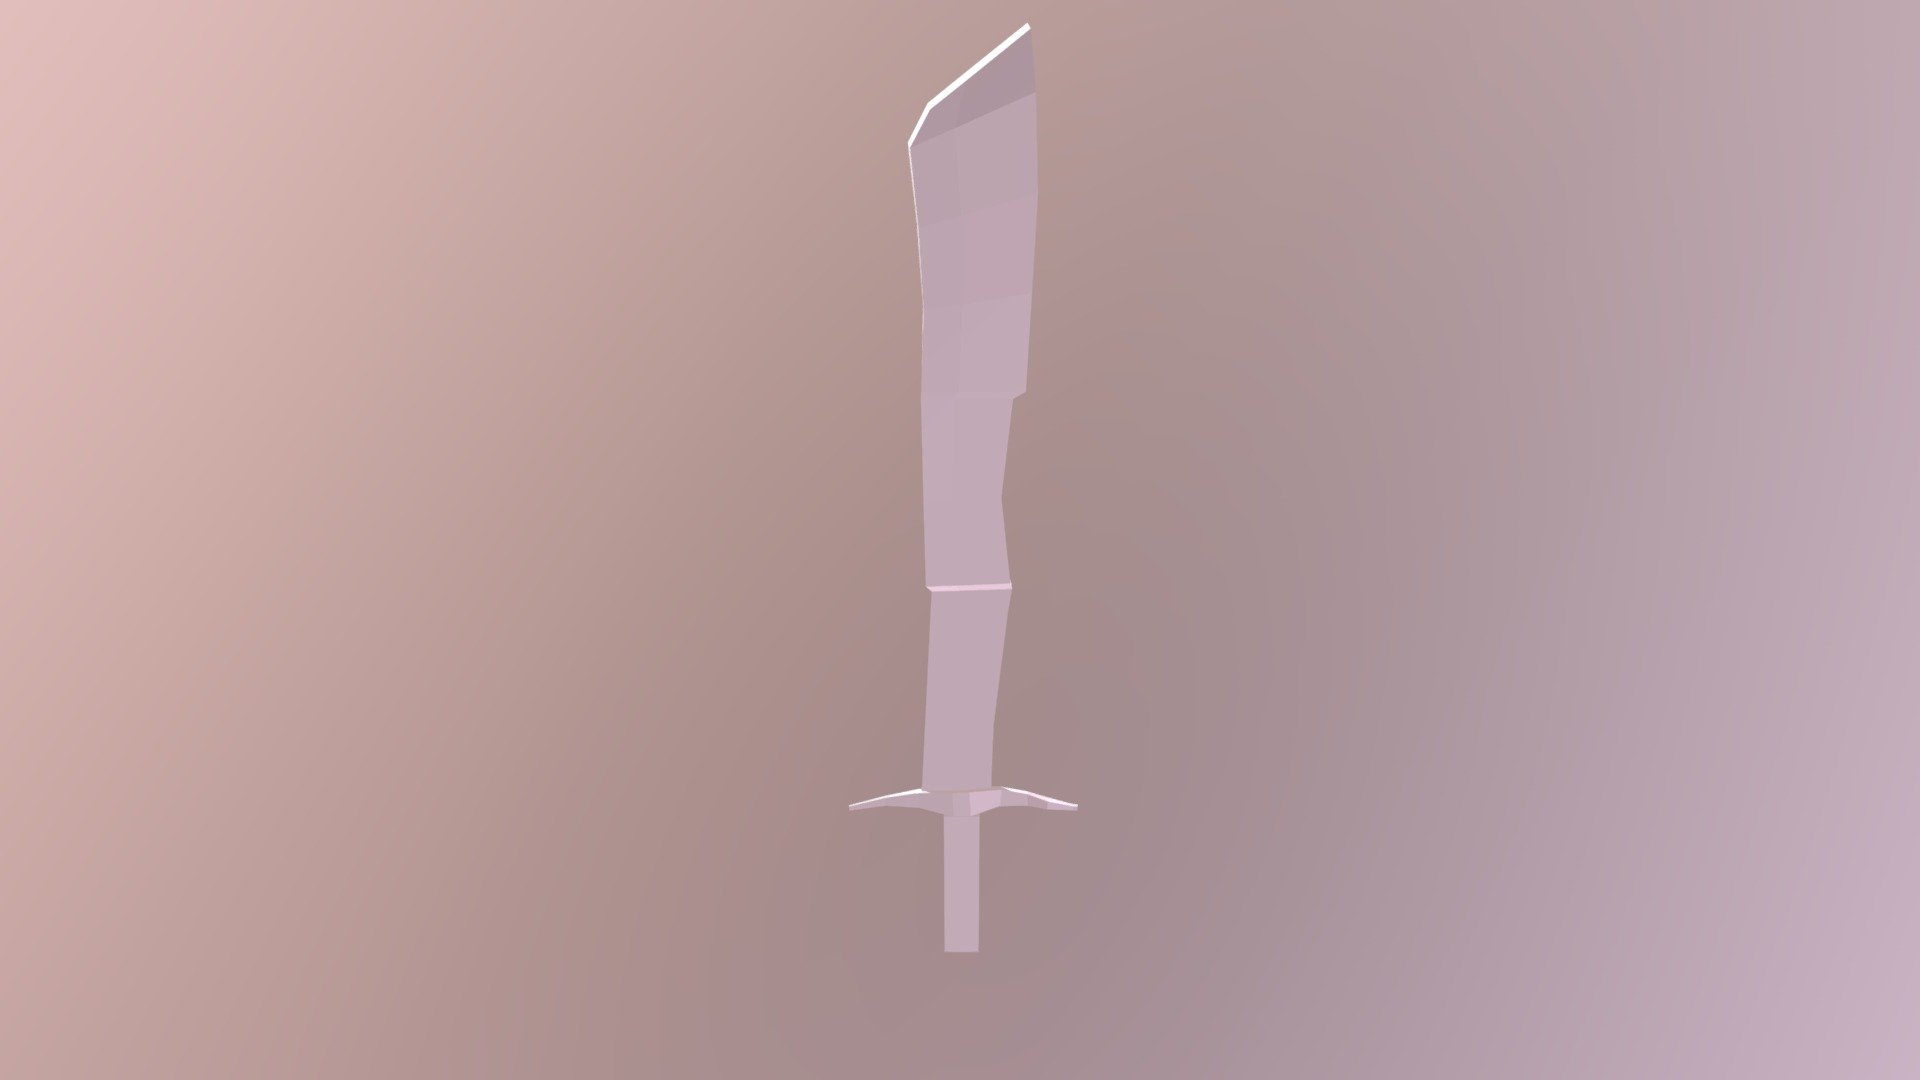 Astra's Sword